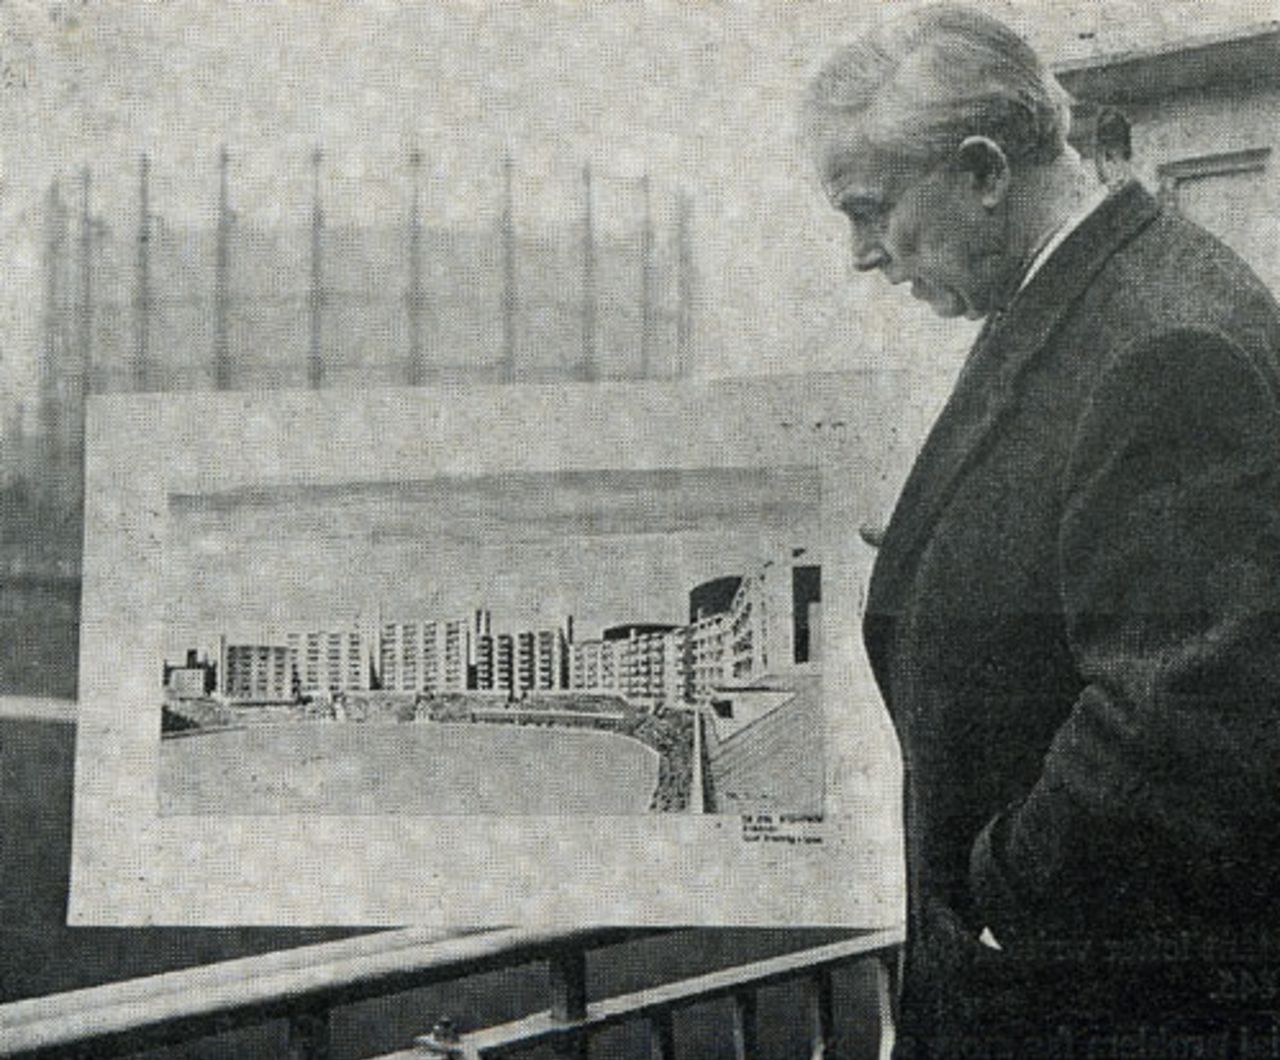 Surrey secretary Geoffrey Howard examines plans for The Oval, January 18, 1967